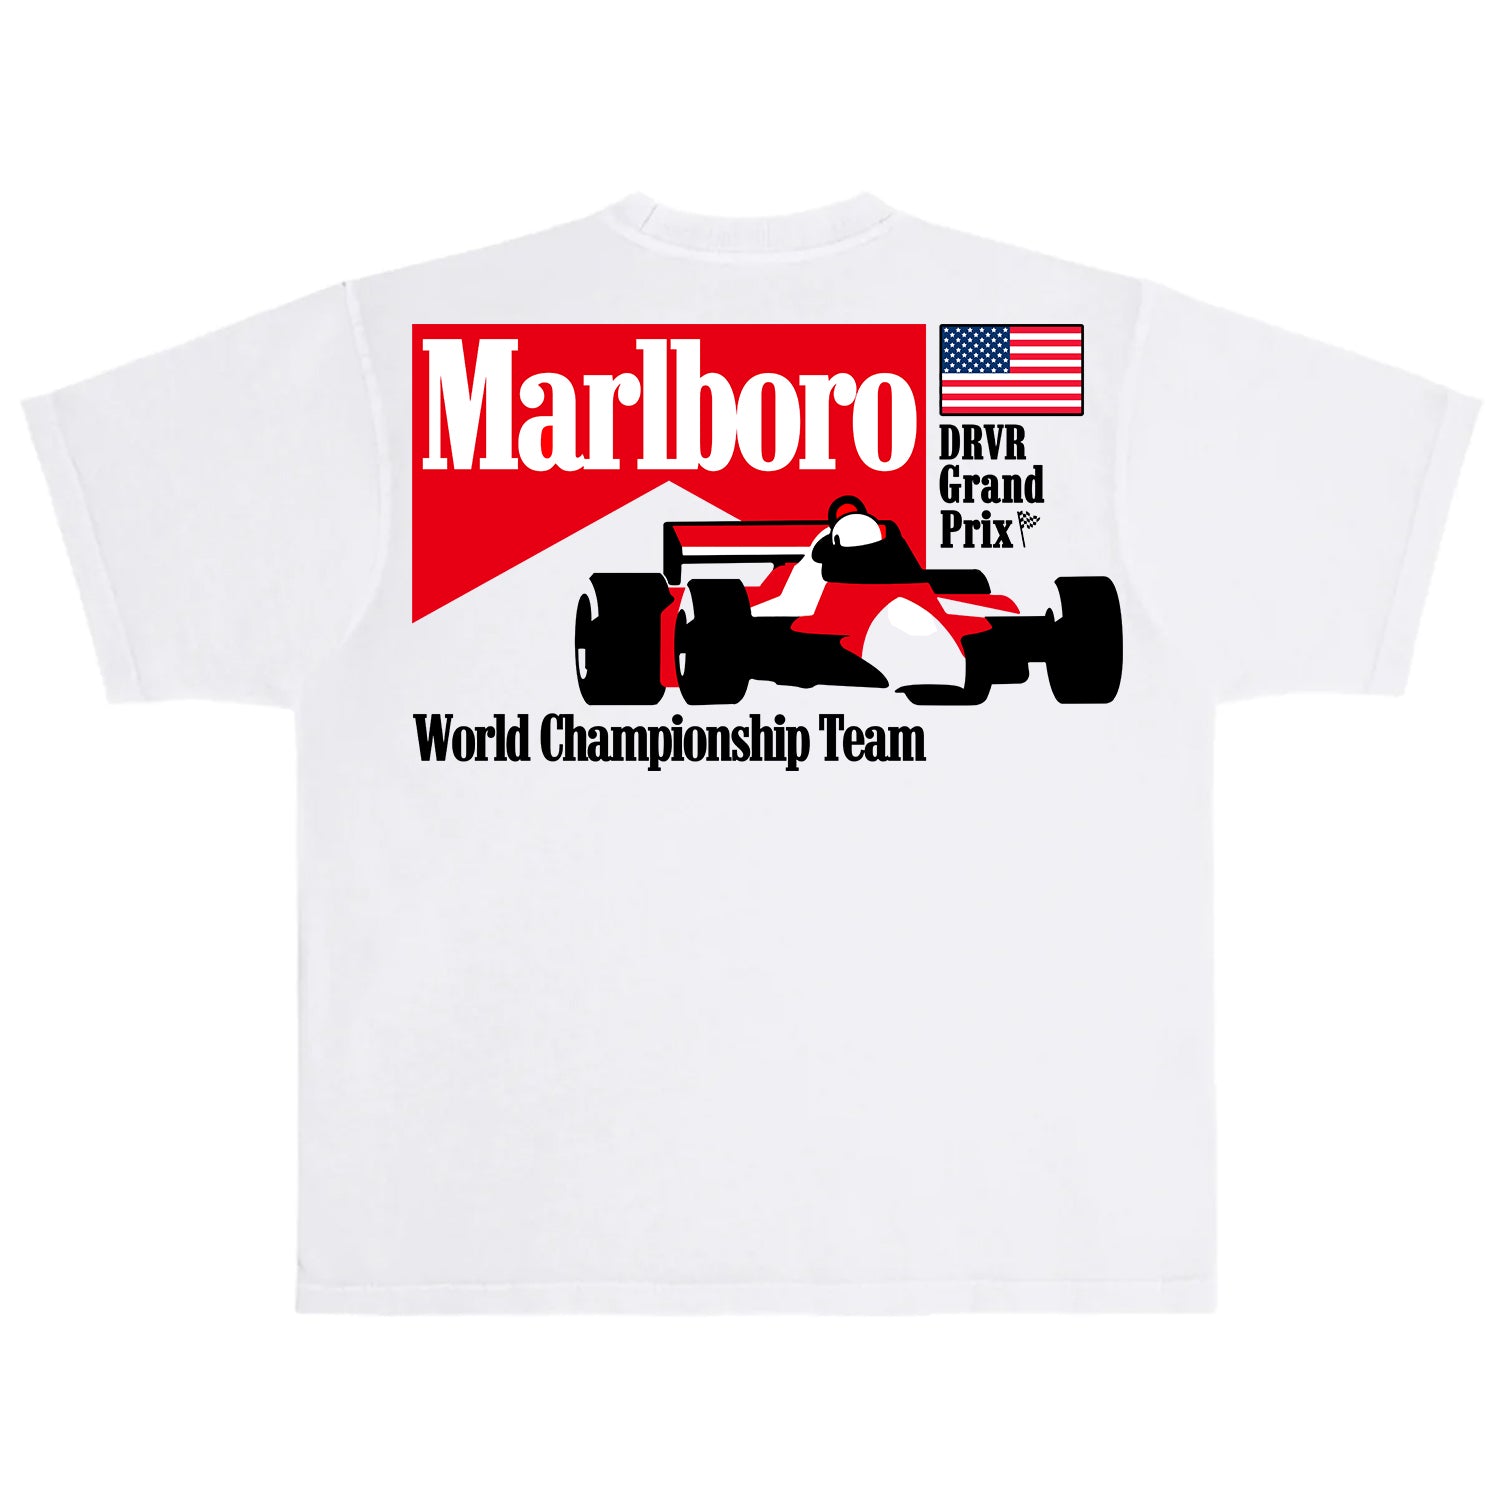 Marlboro Racing DRVR Grand Prix. 100% Heavyweight Cotton. Oversize fit